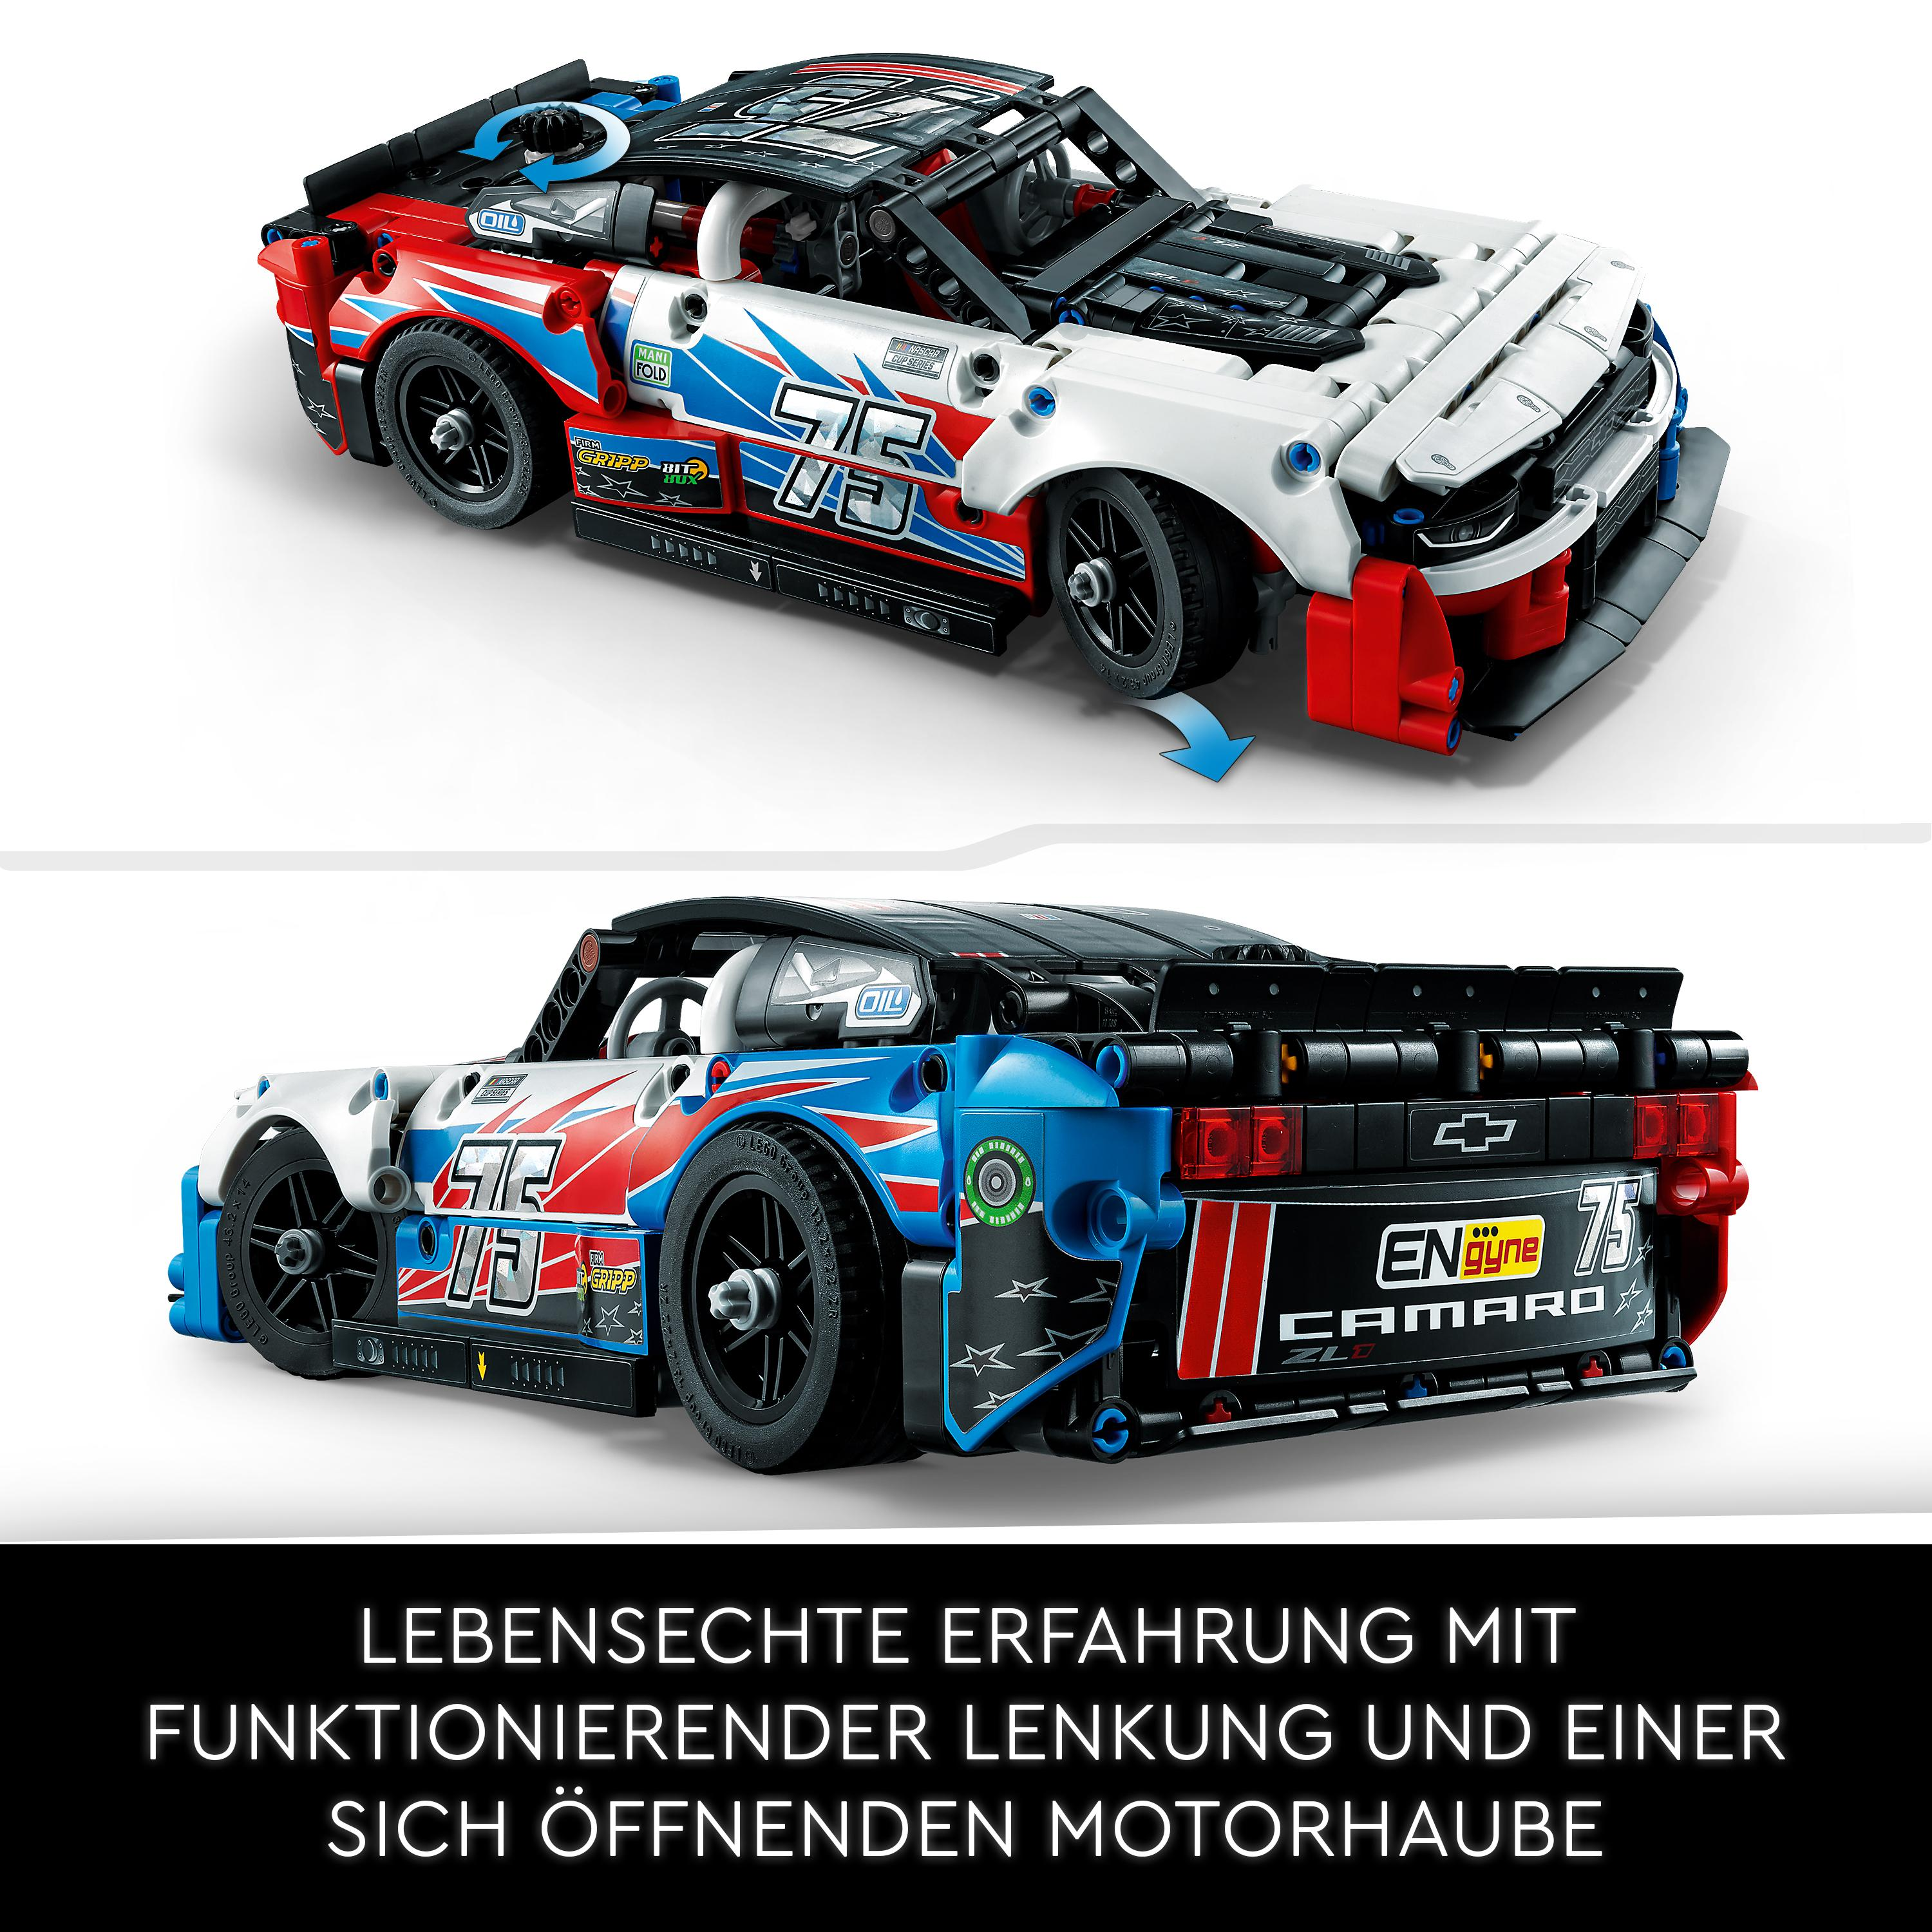 LEGO Technic Bausatz, Chevrolet 42153 ZL1 NASCAR Camaro Gen Next Mehrfarbig